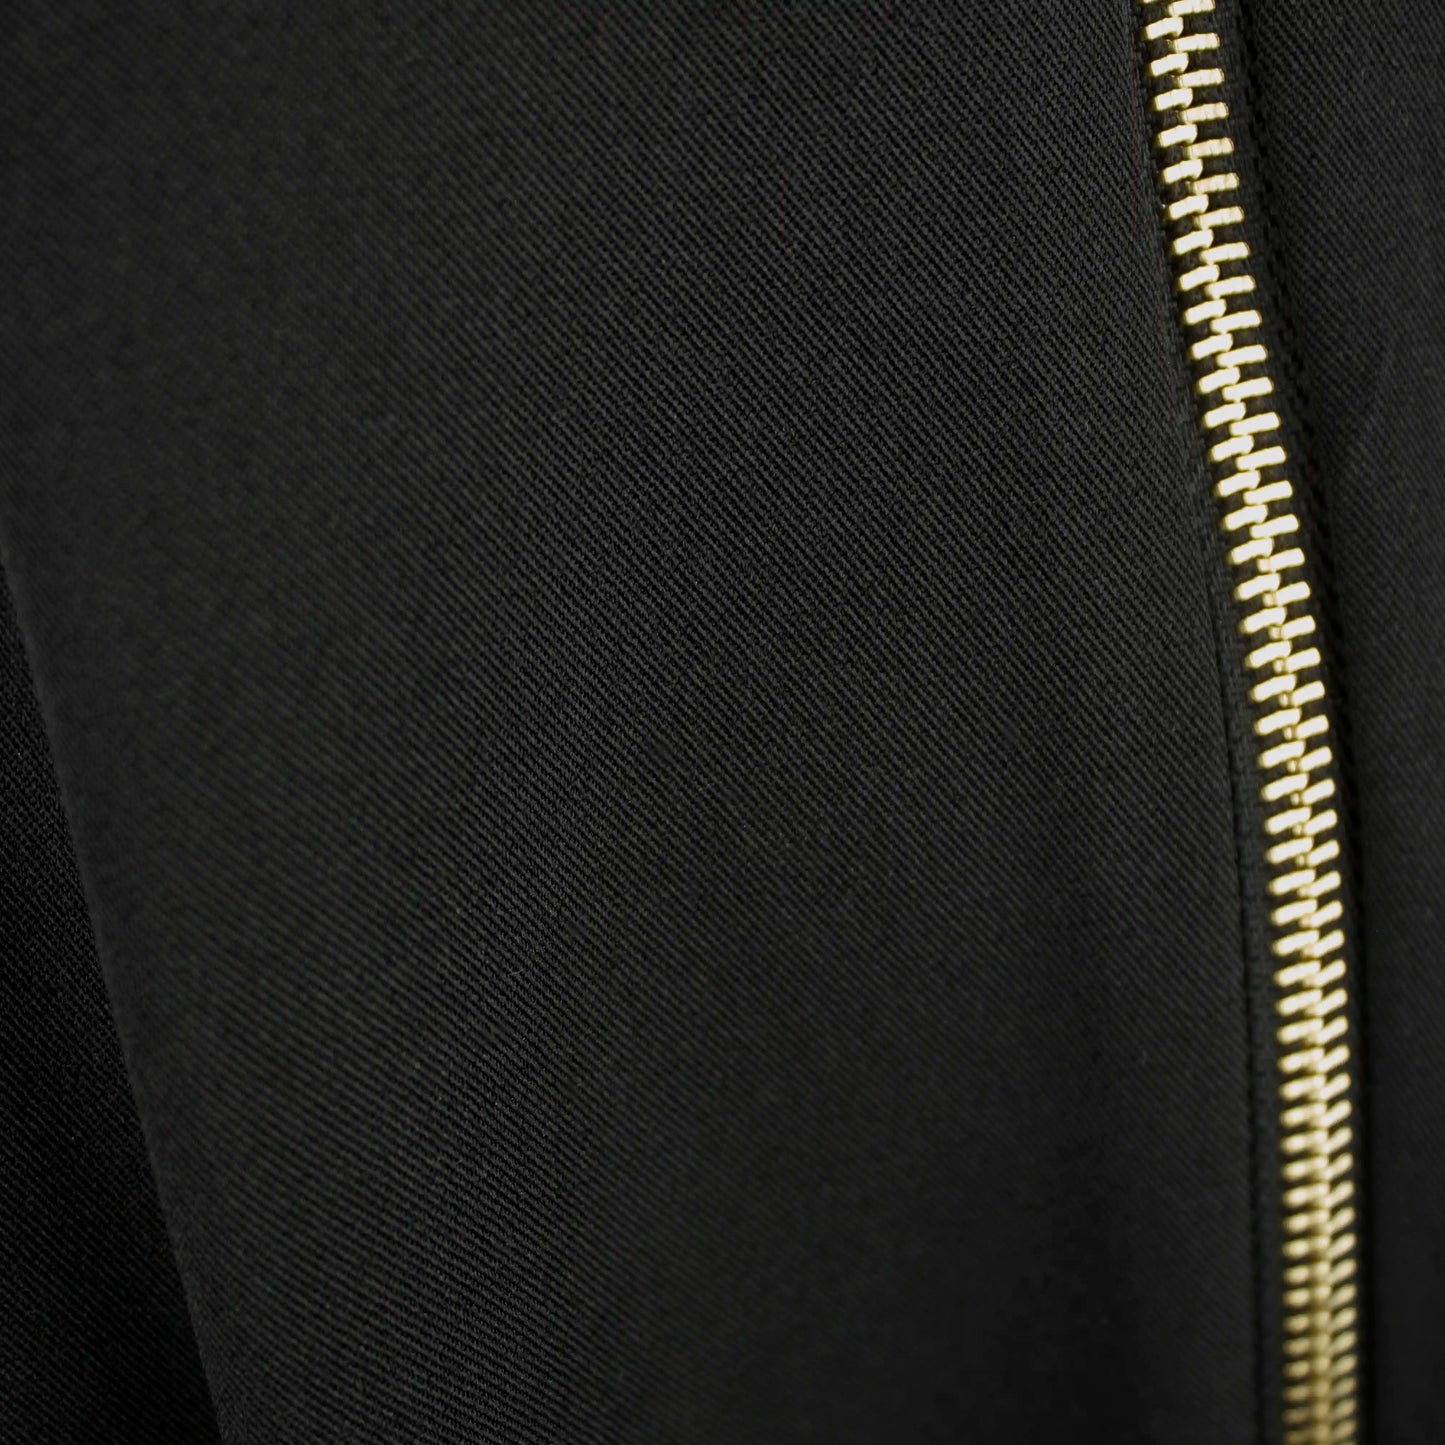 Leigh Schubert Coat Dresses CLARIAT Black